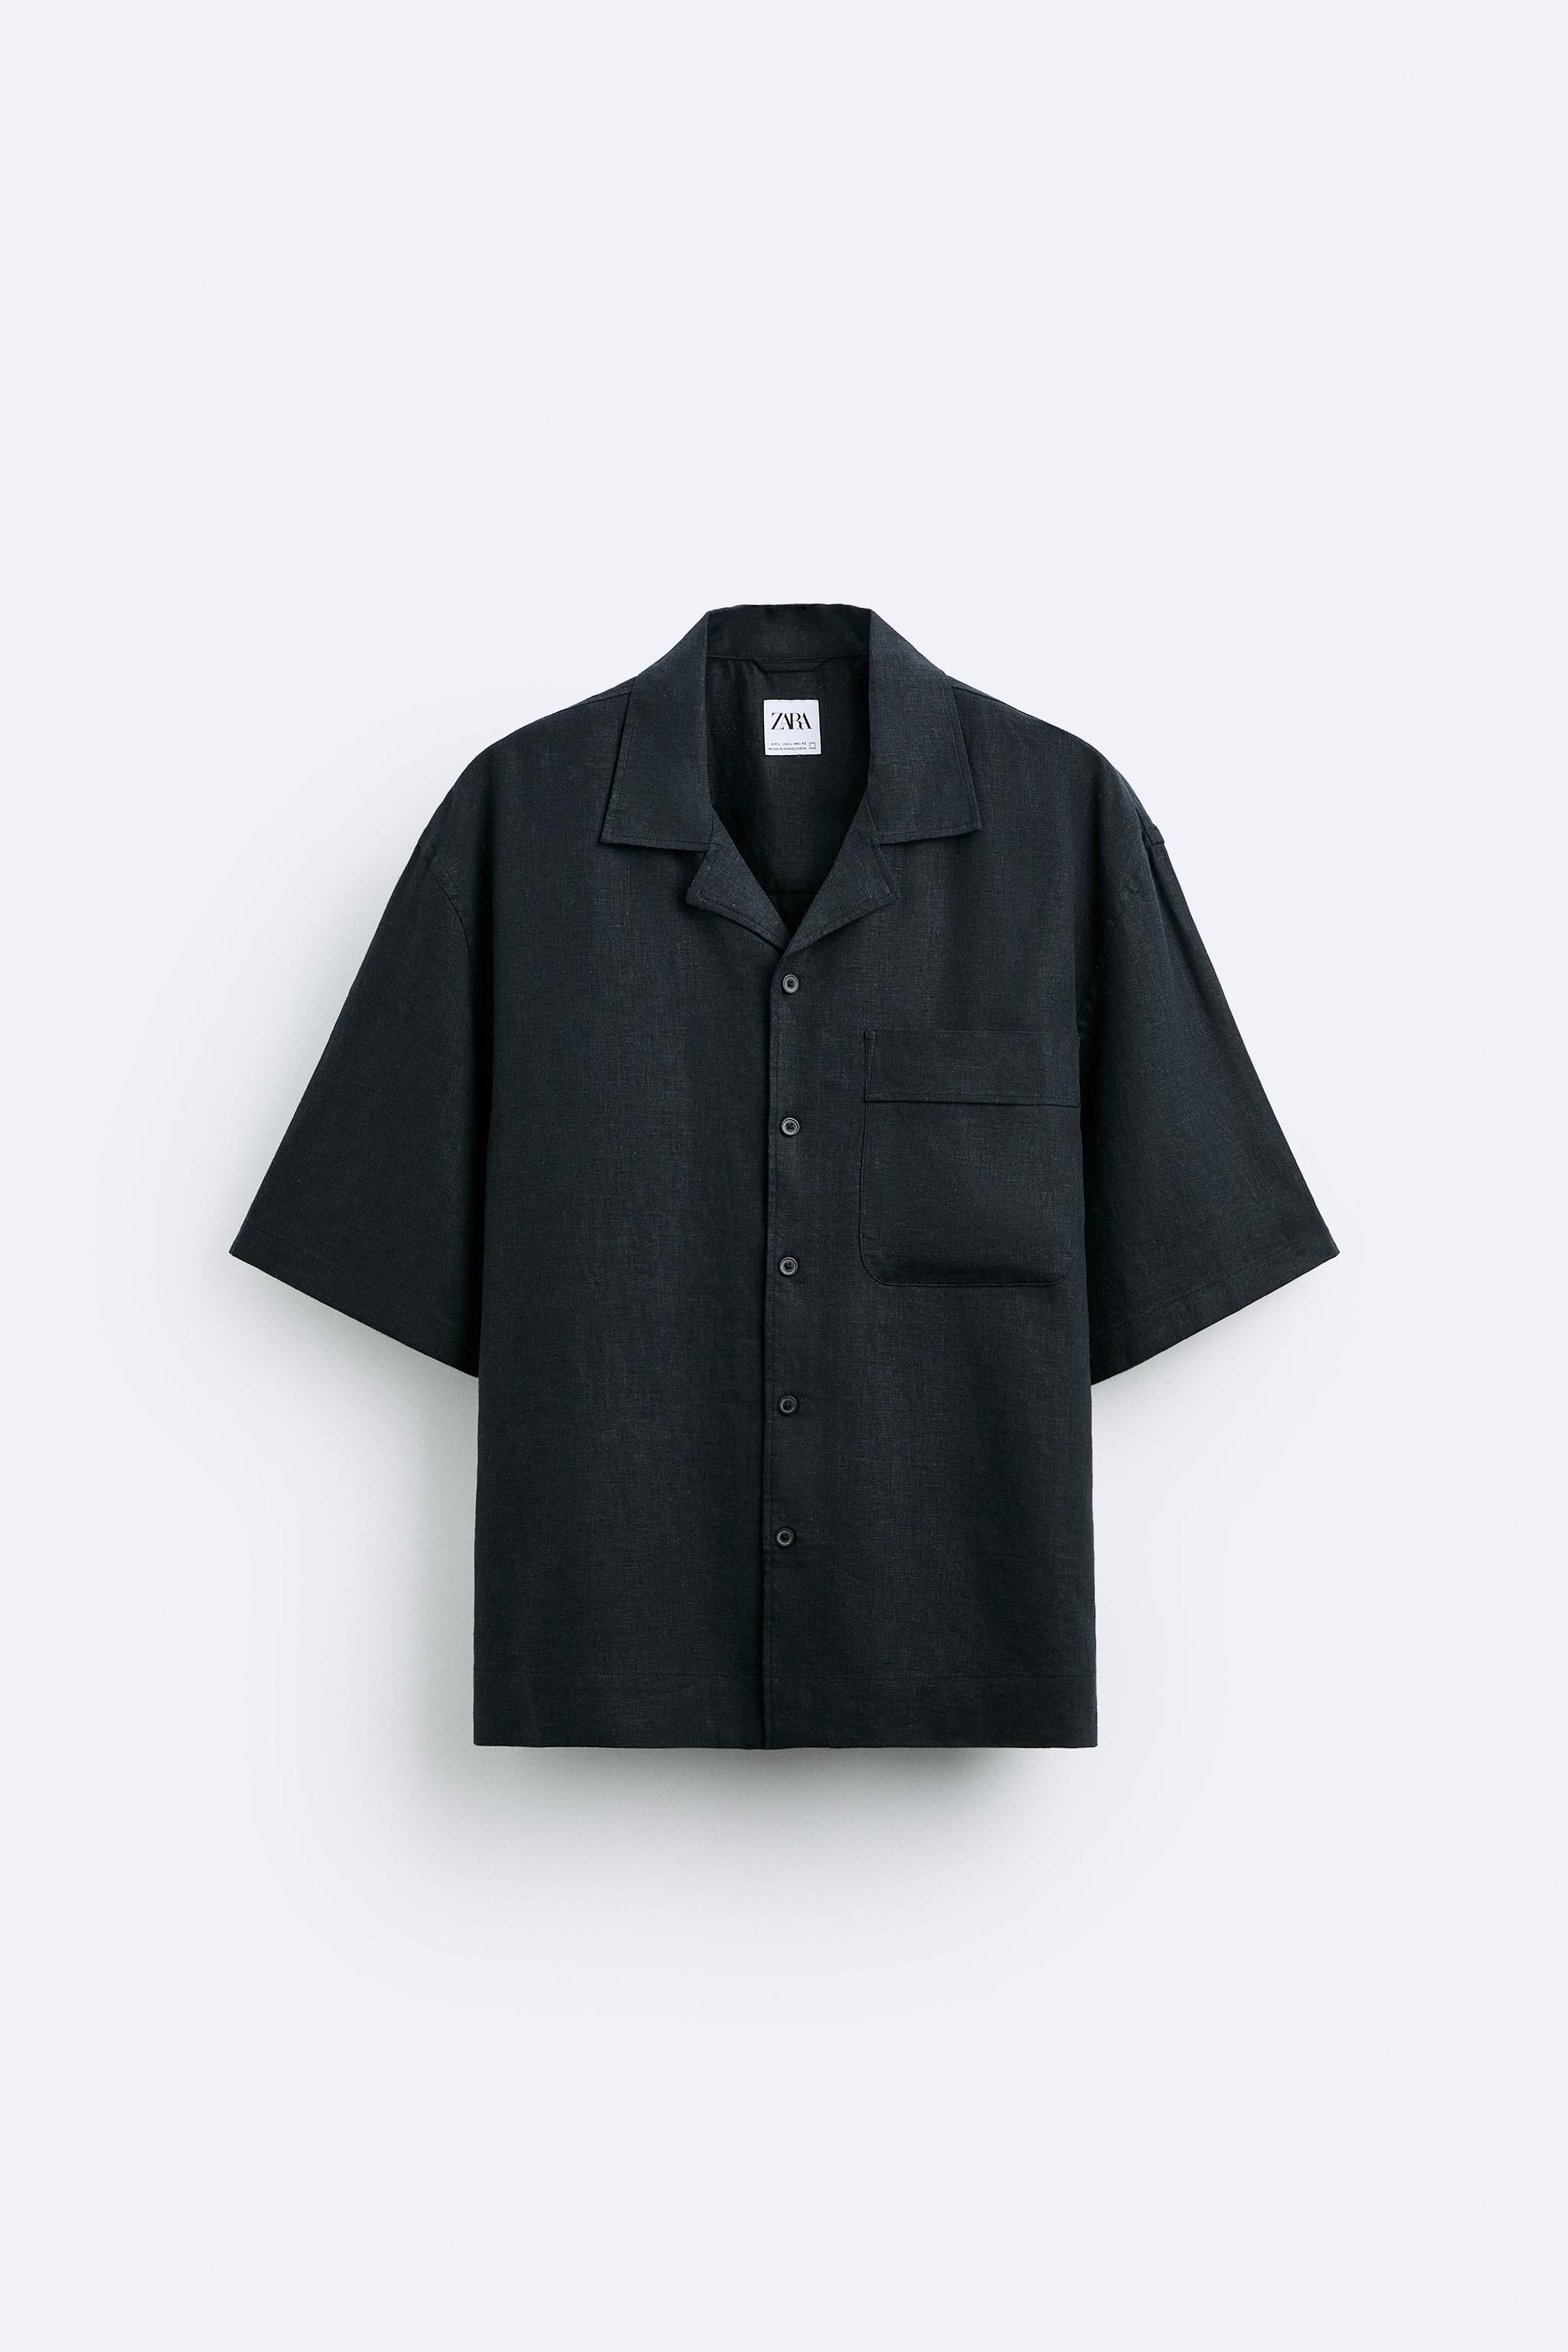 Рубашка Zara Viscose/linen Blend, черный рубашка zara viscose linen blend белый